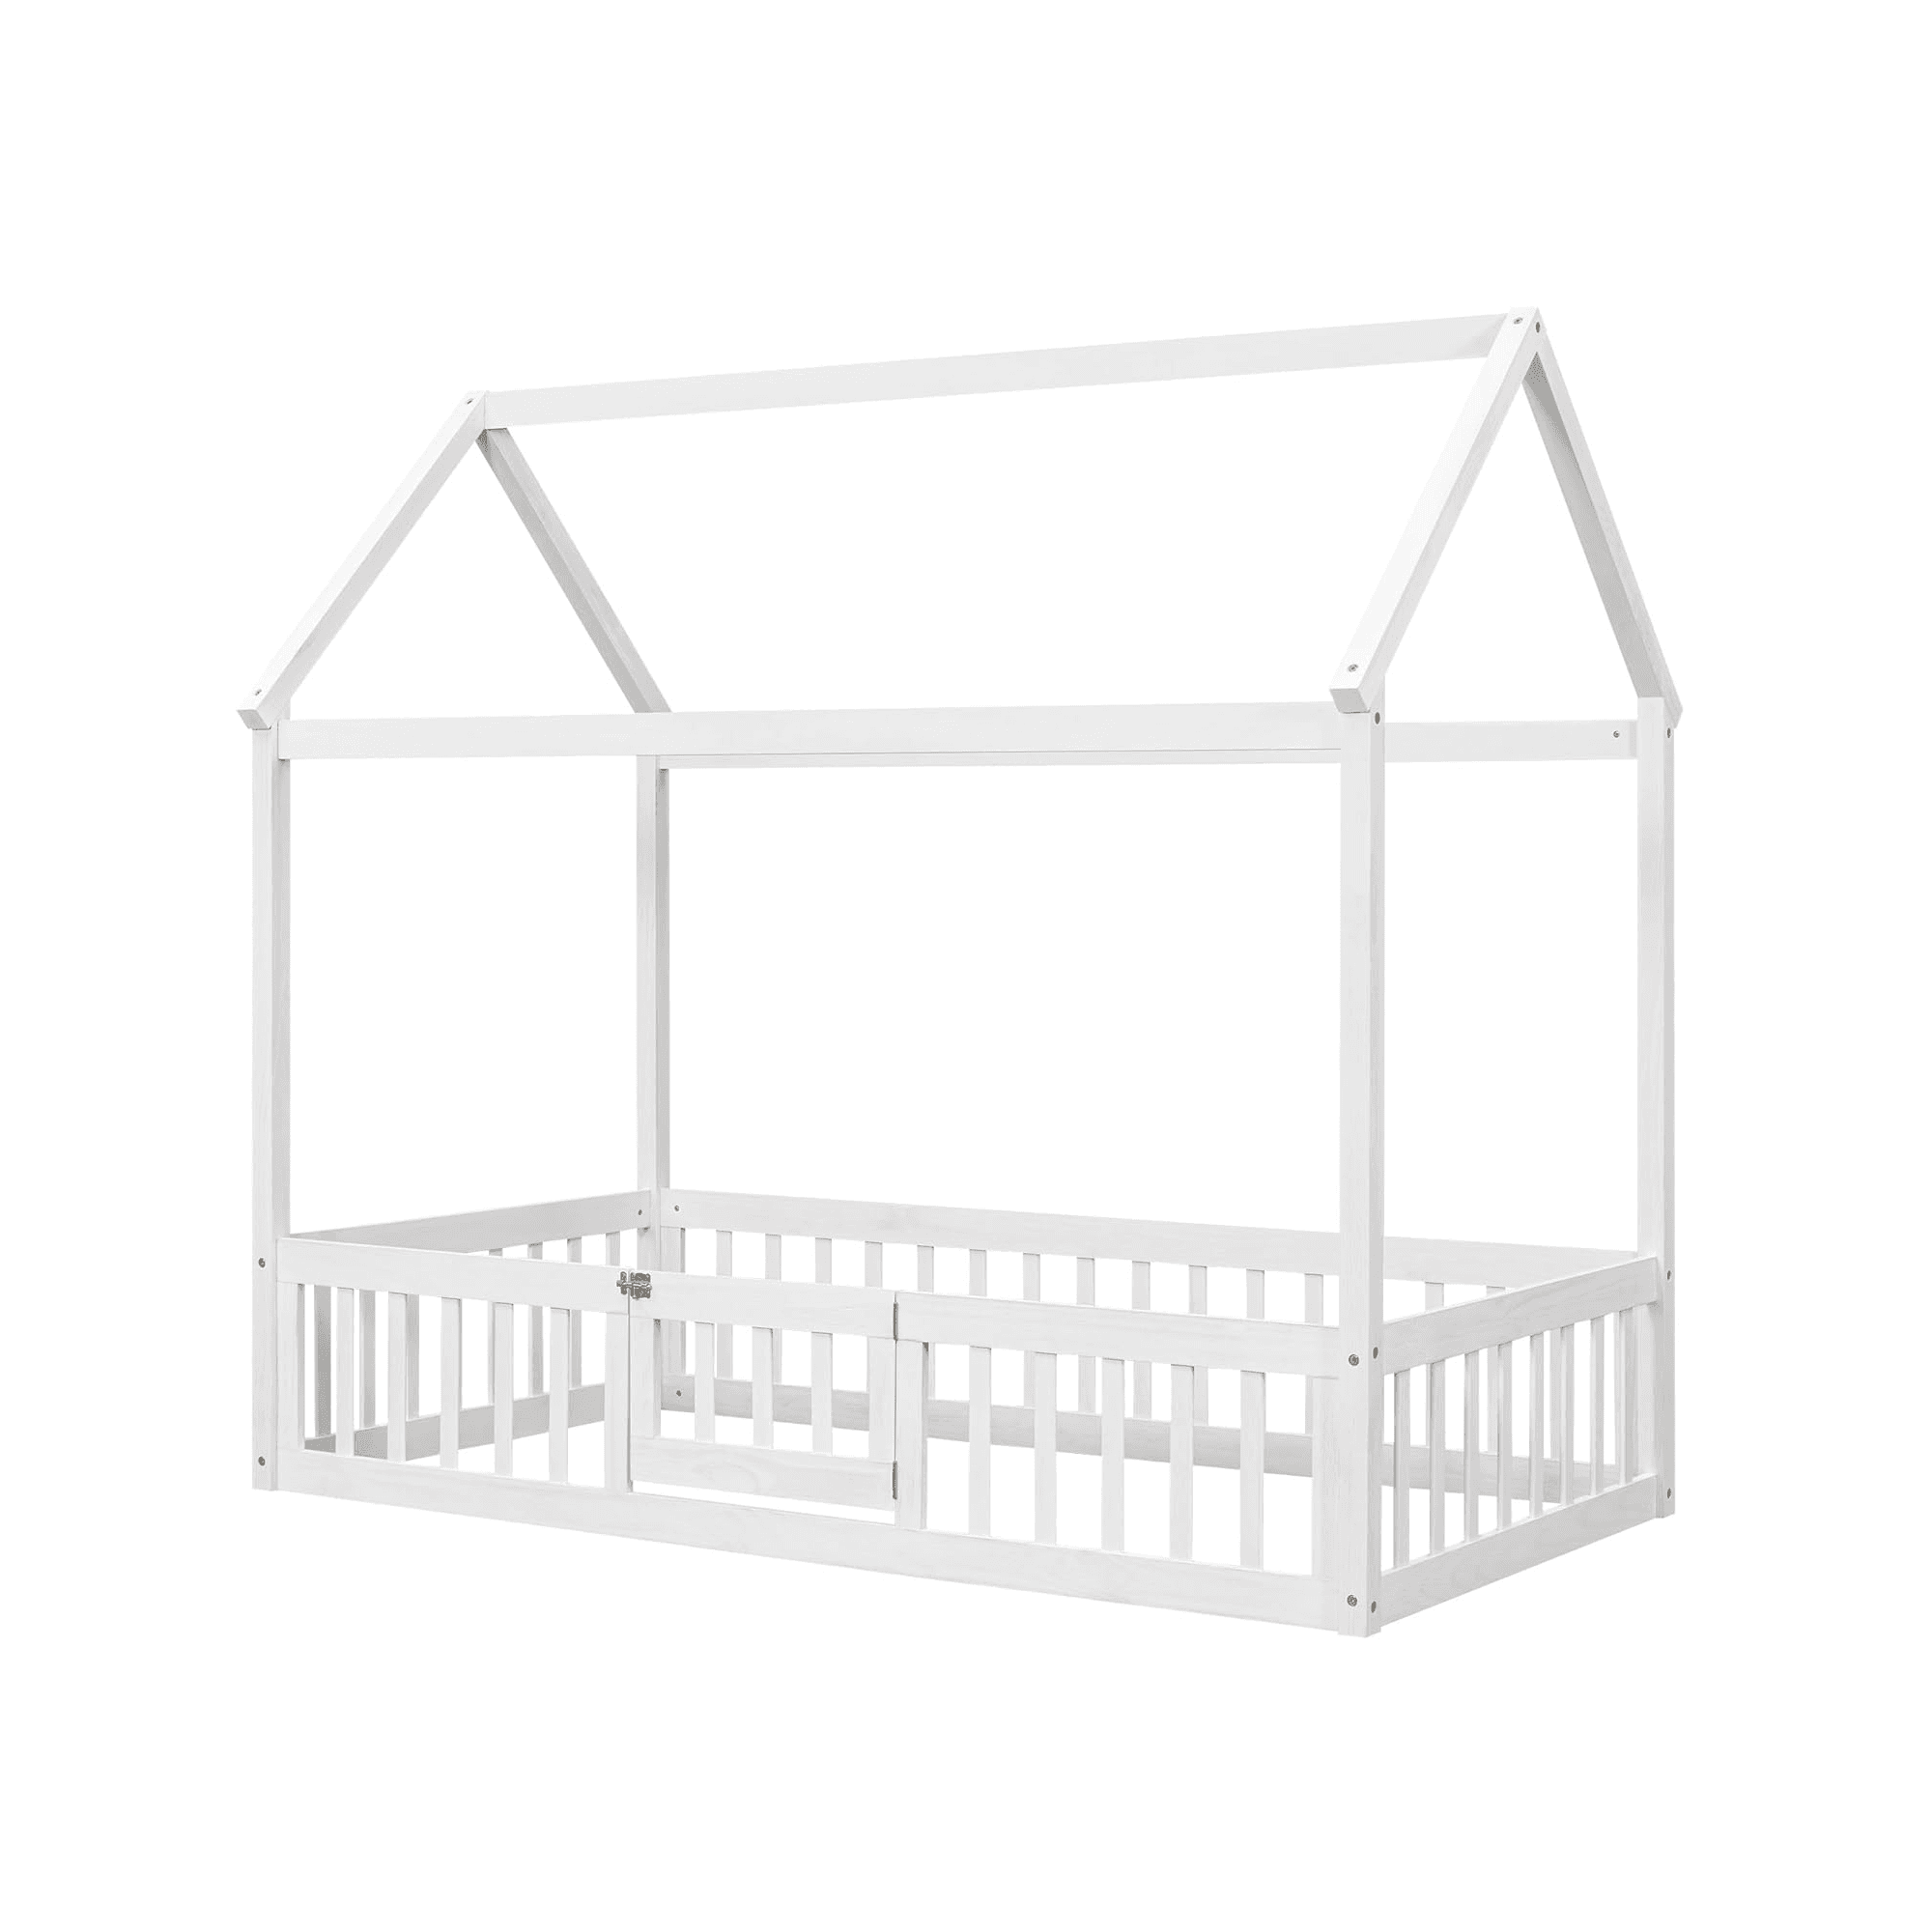 Montessori Meritline Twin Size Floor House Bed Frame With Fence & Door White